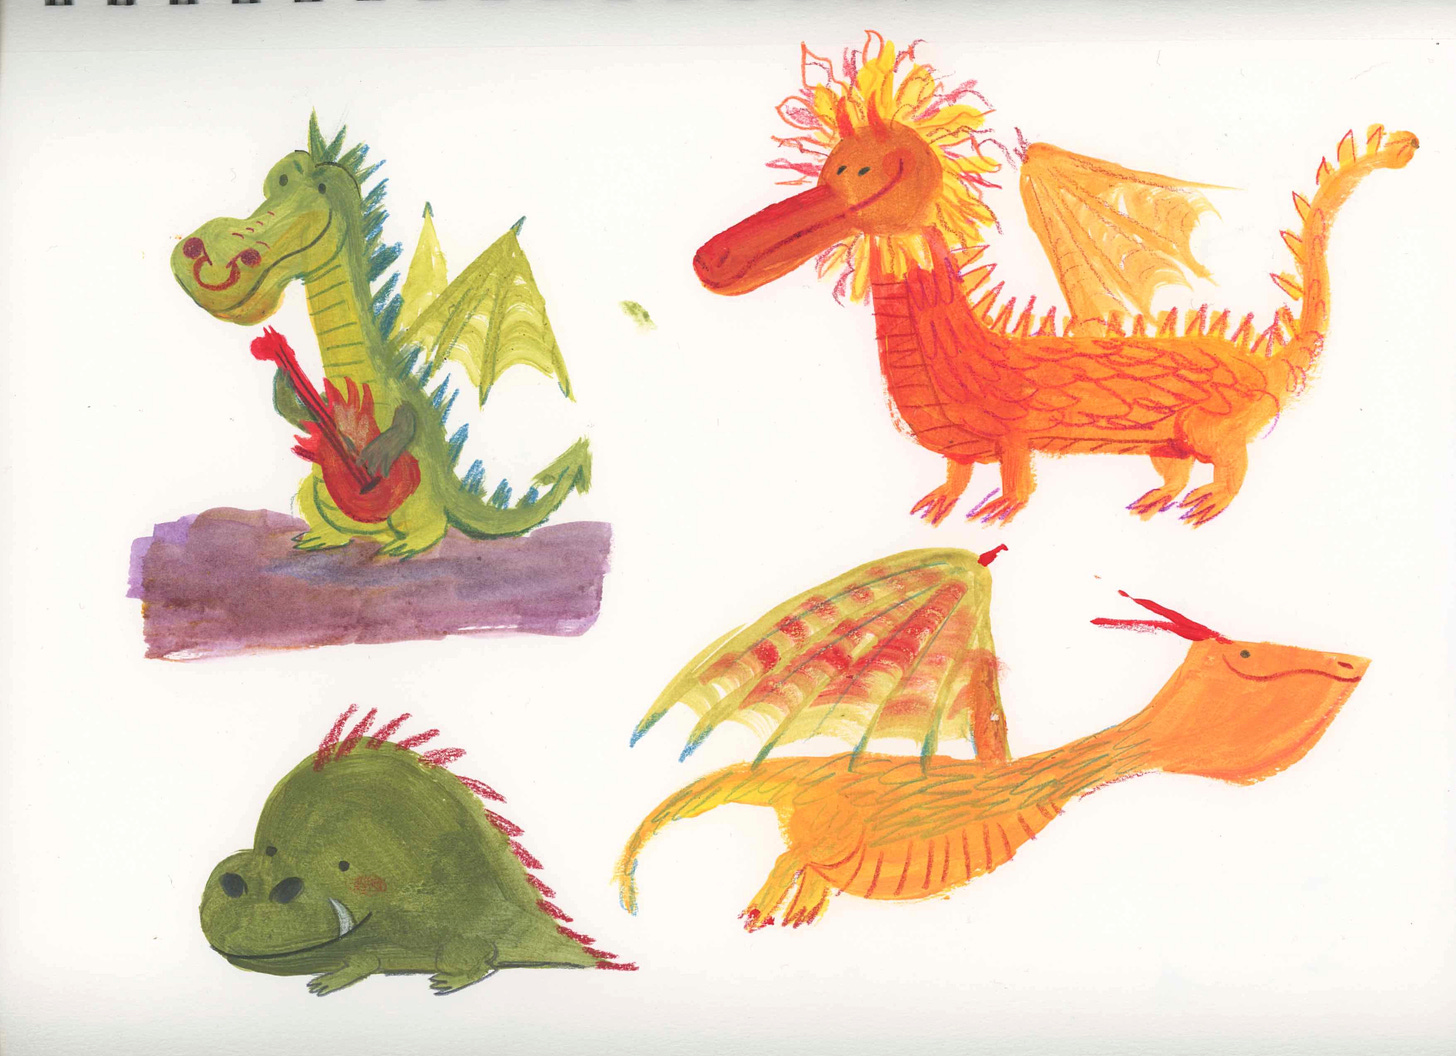 Drawing Dragons by Brittleburst - Make better art